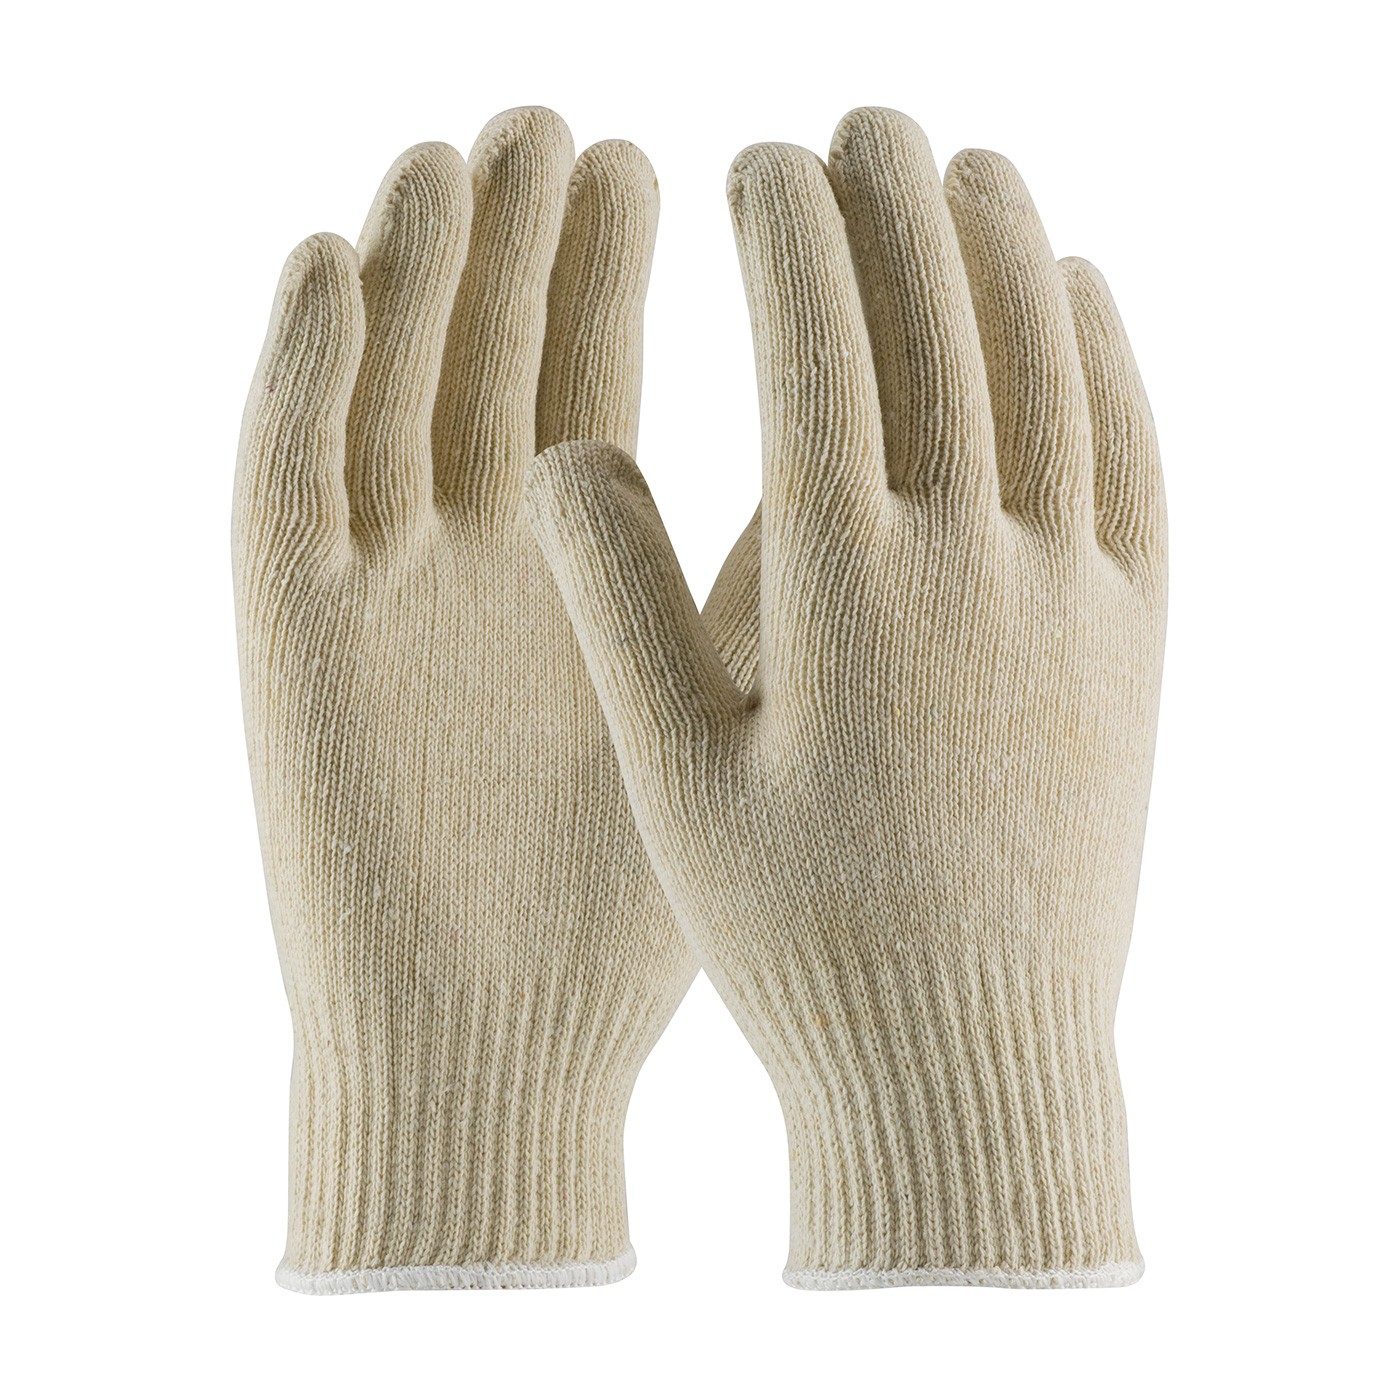 PIP® Medium Weight Seamless Knit Cotton/Polyester Glove - 10 Gauge Natural  (#35-C2110)